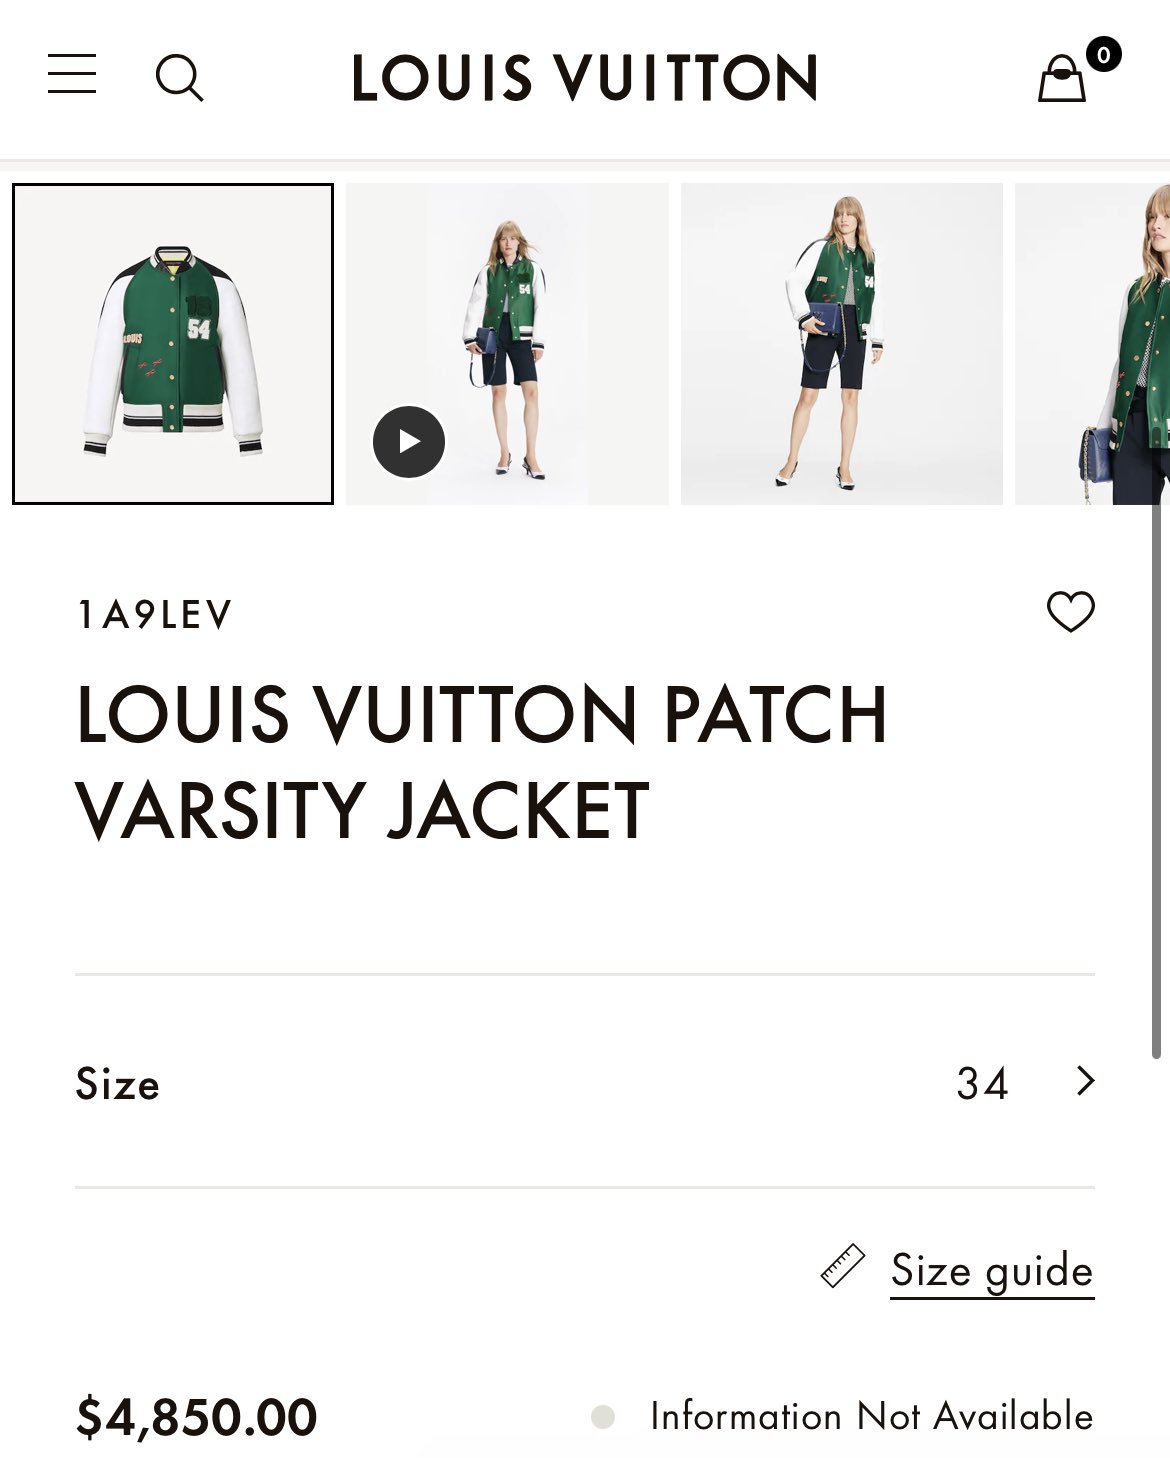 Dawn Staley LV Patch Varsity Jacket